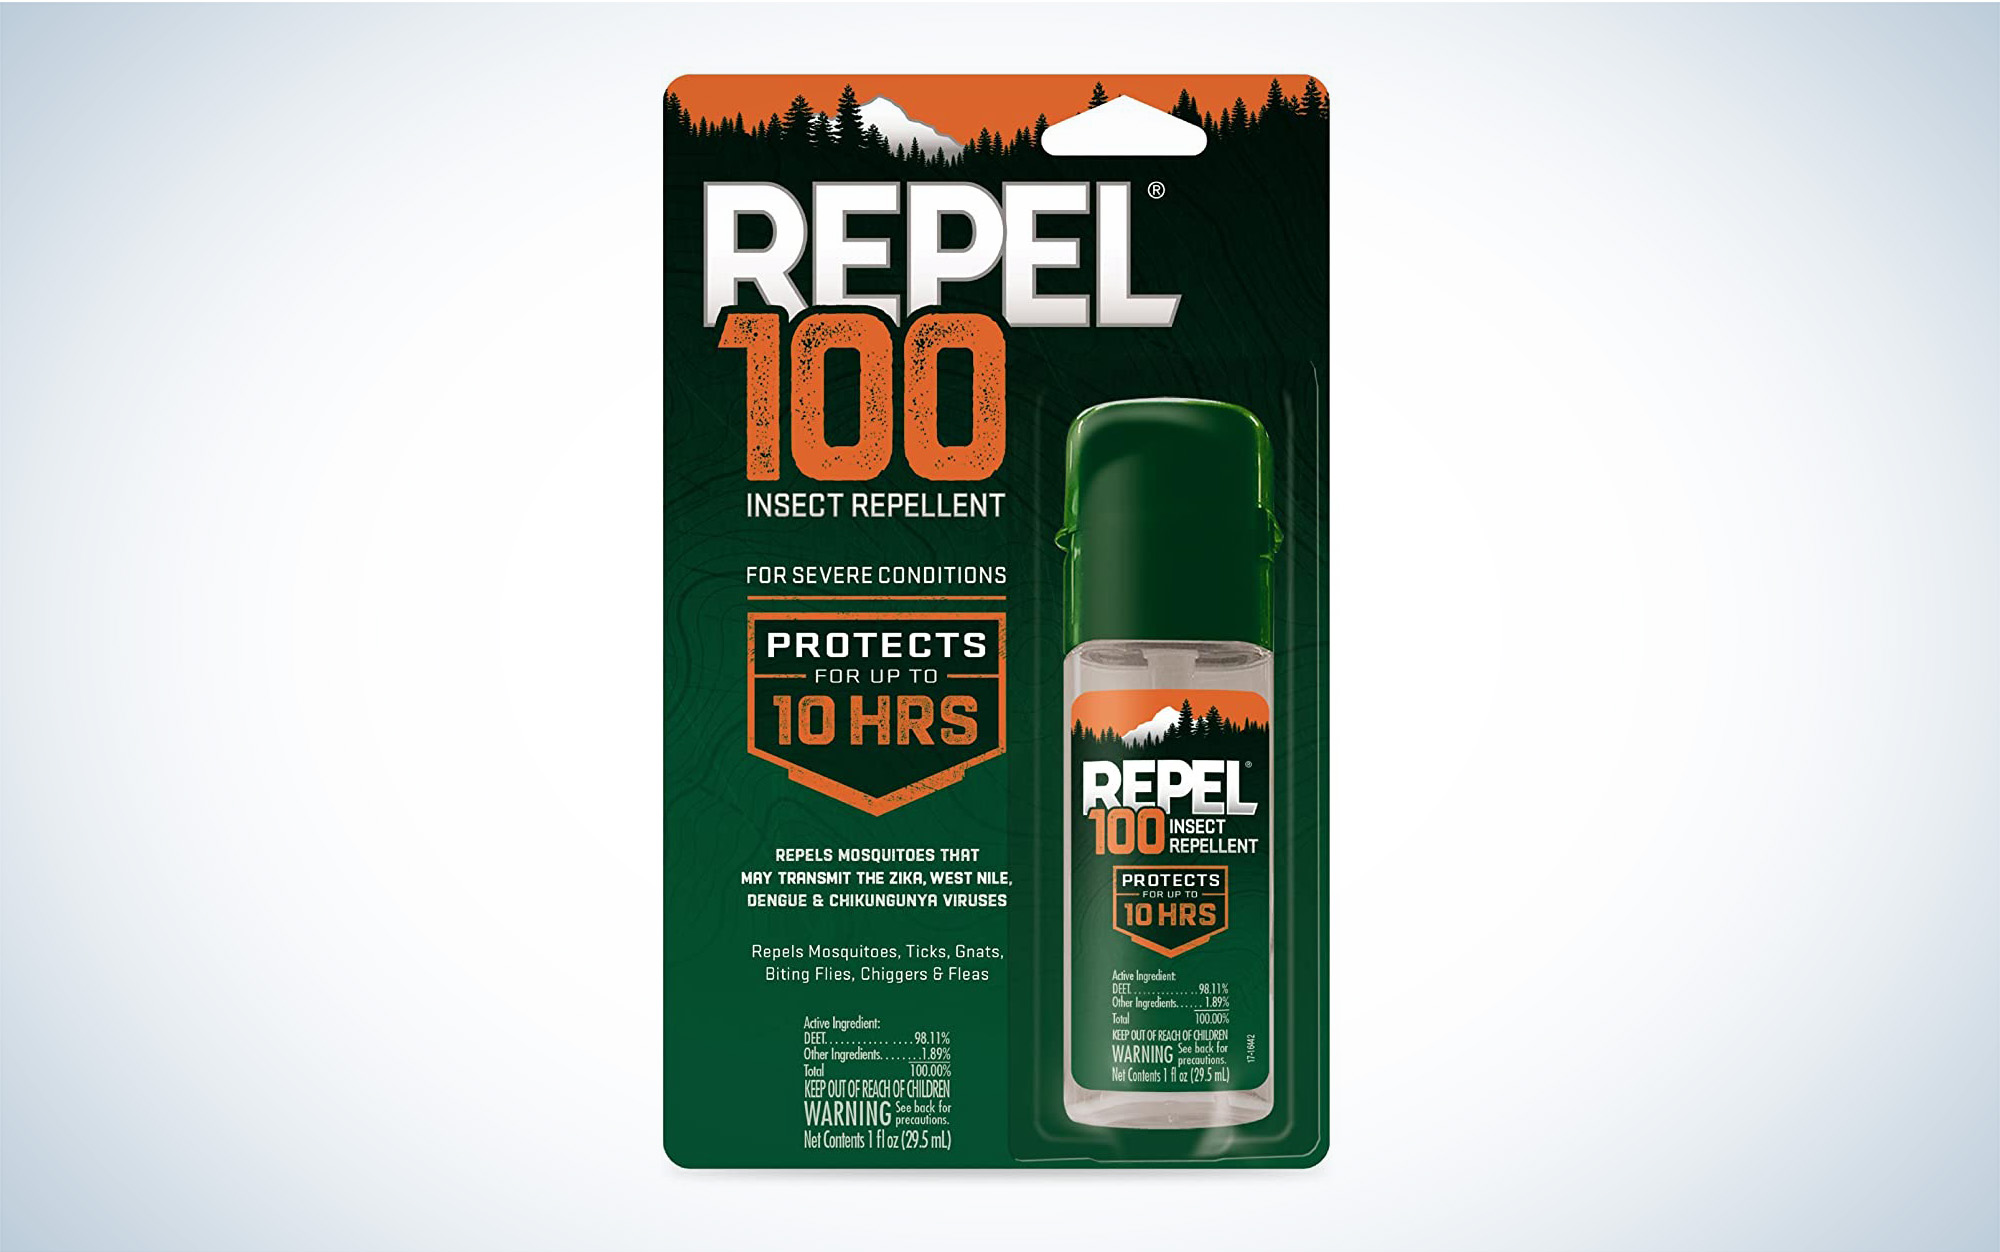 Repel 100 is a DEET based repellent